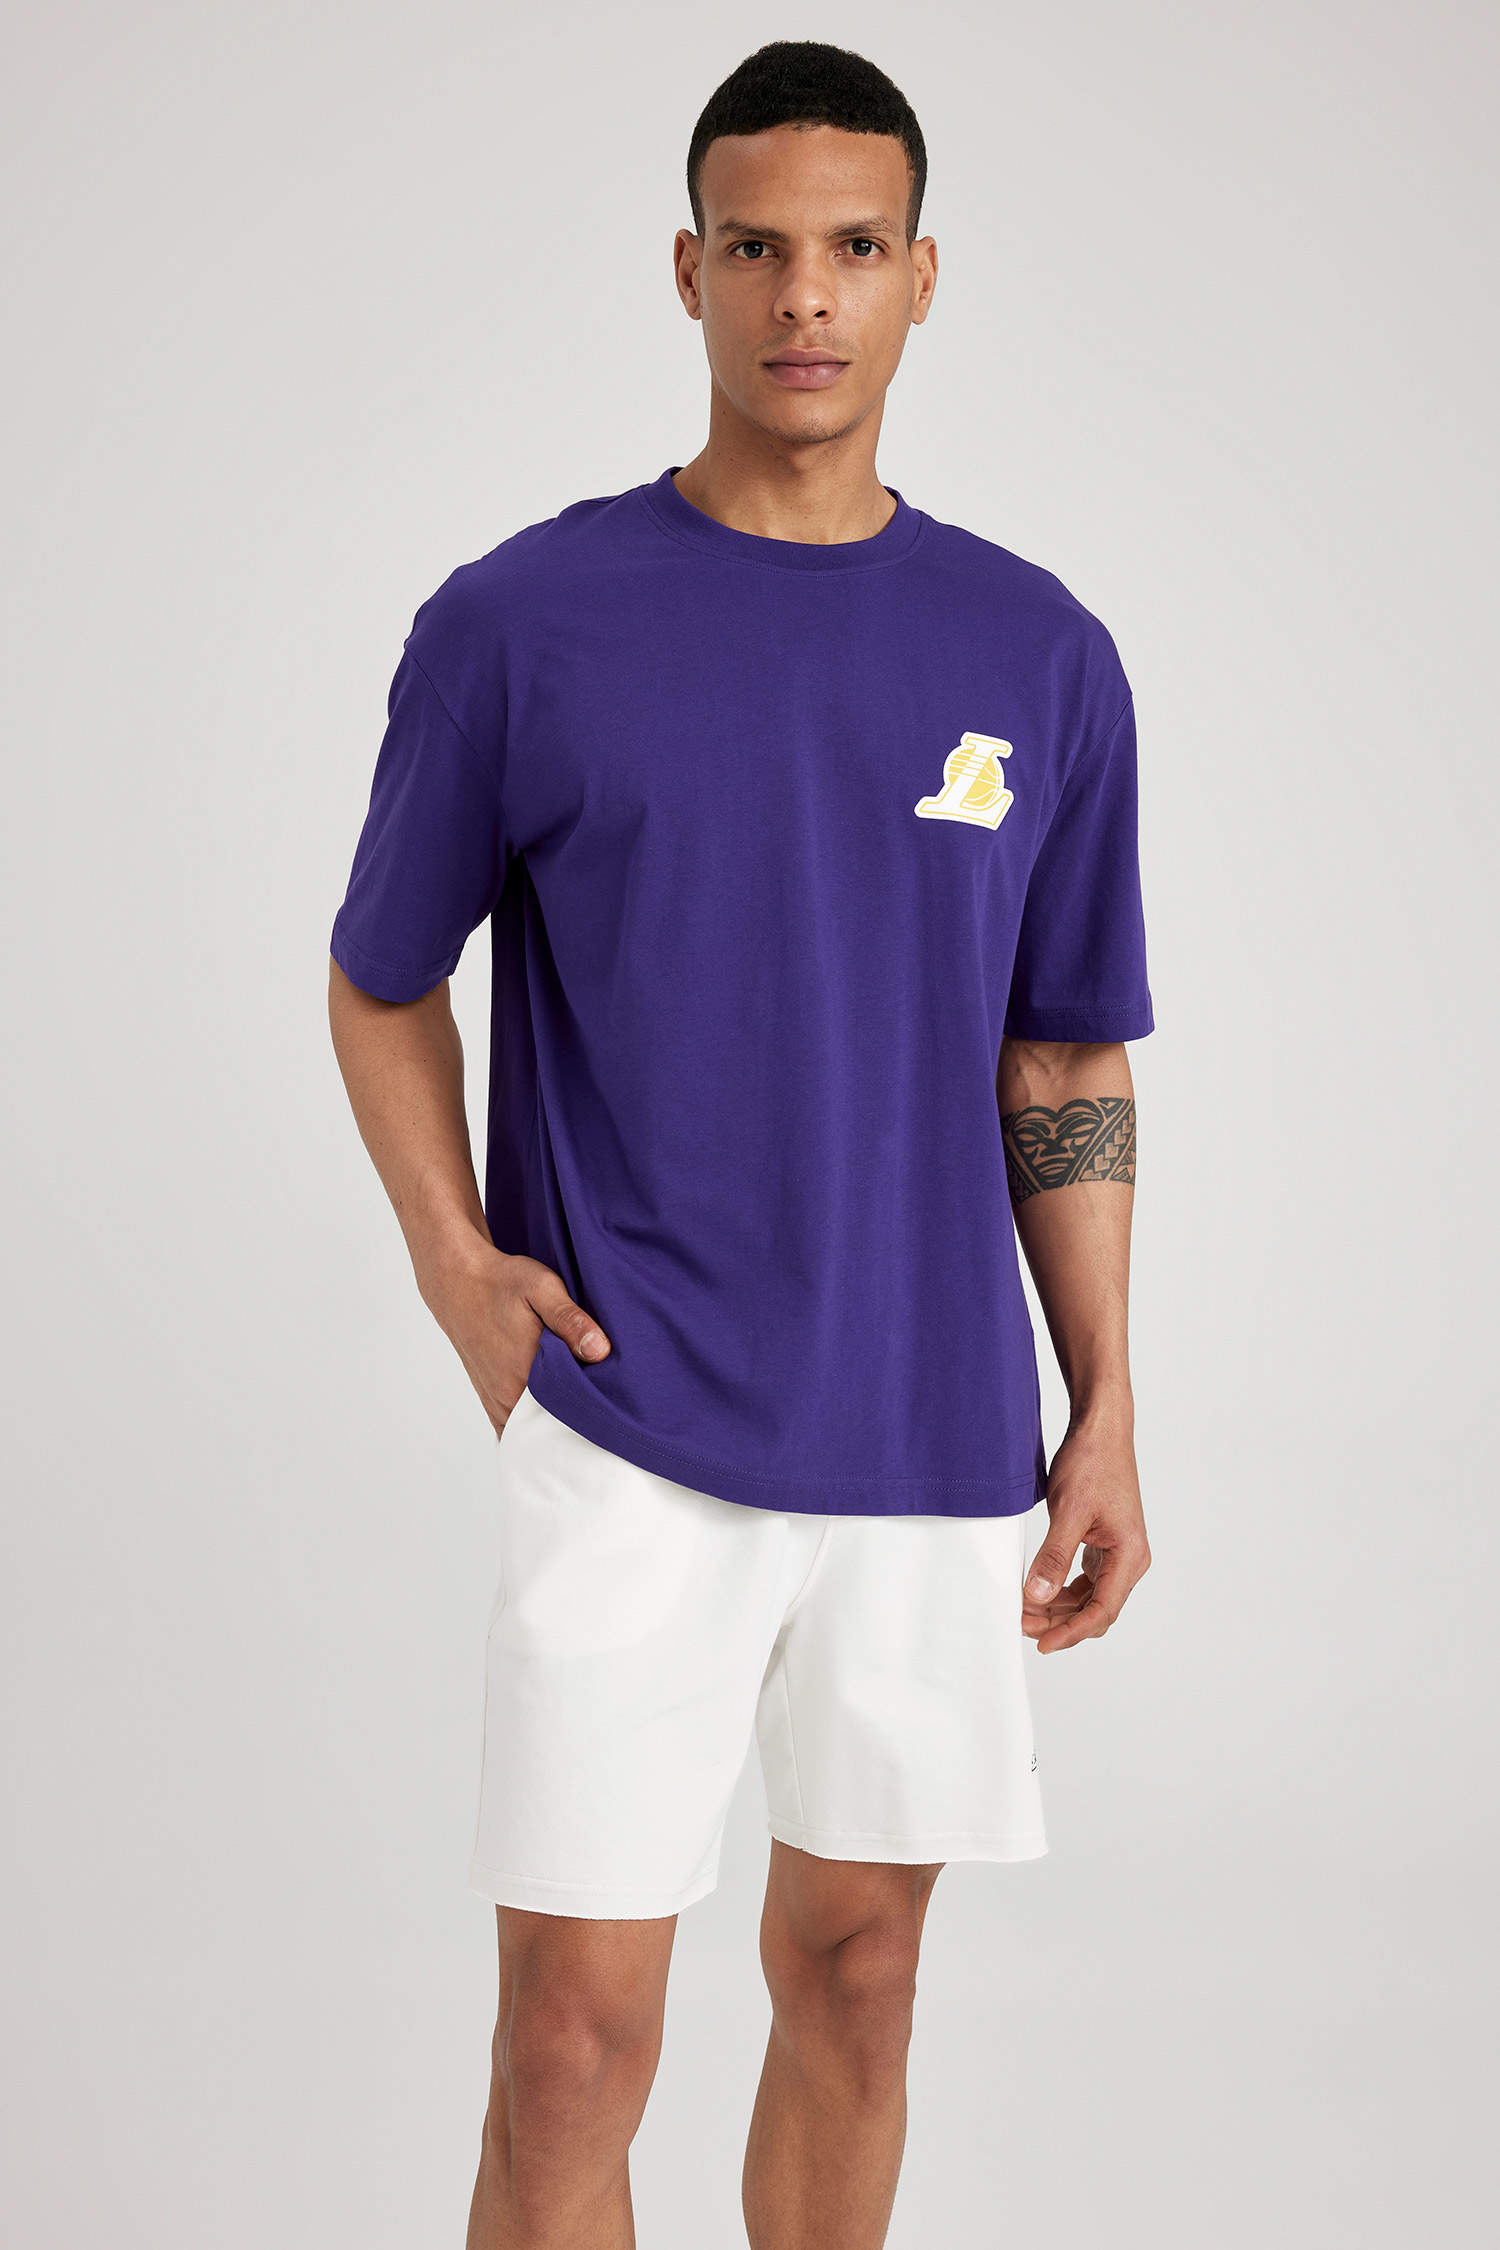 purple lakers shirt